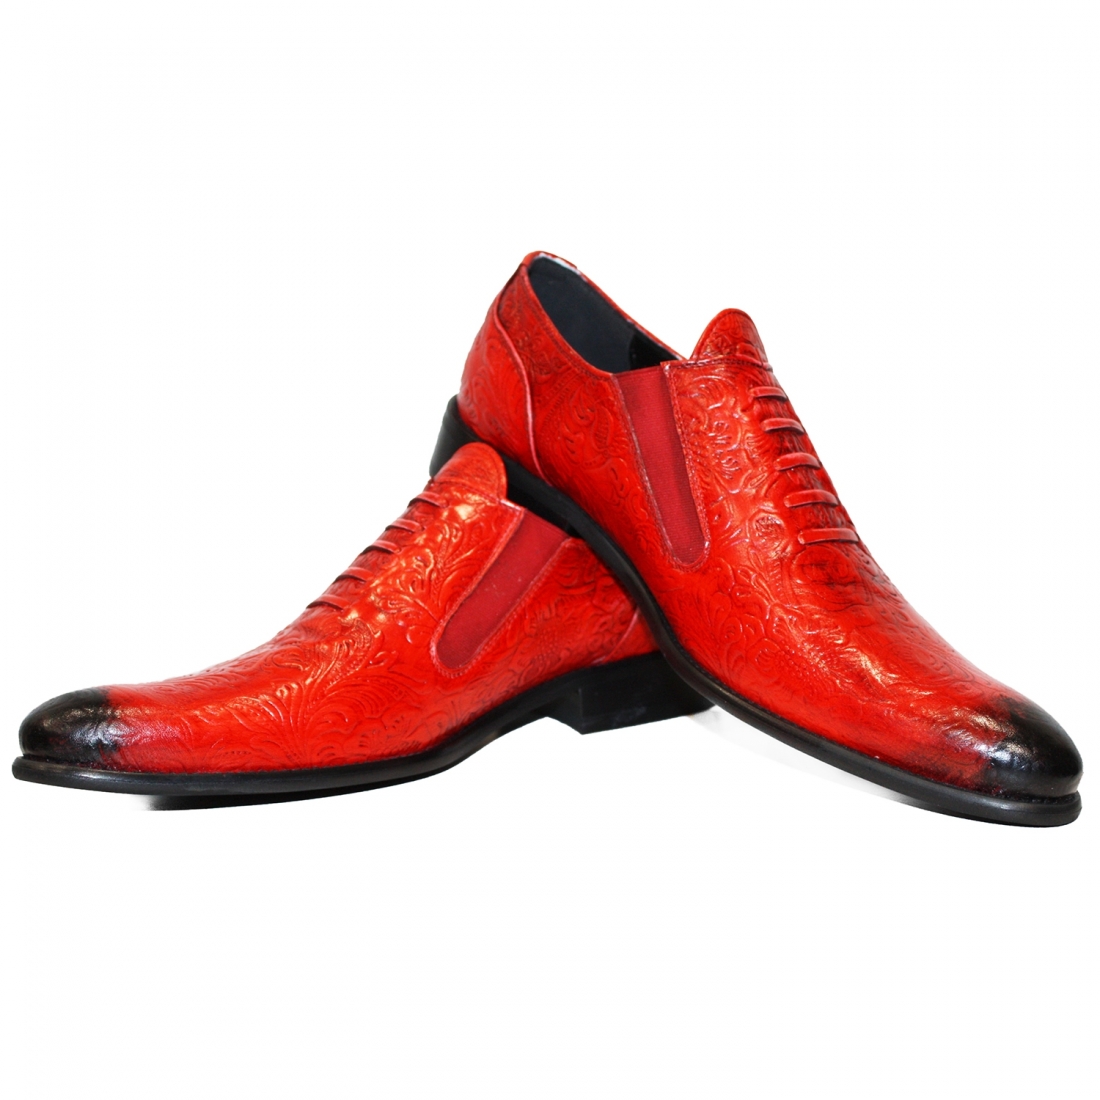 Modello Vampiro - Slipper - Handmade Colorful Italian Leather Shoes